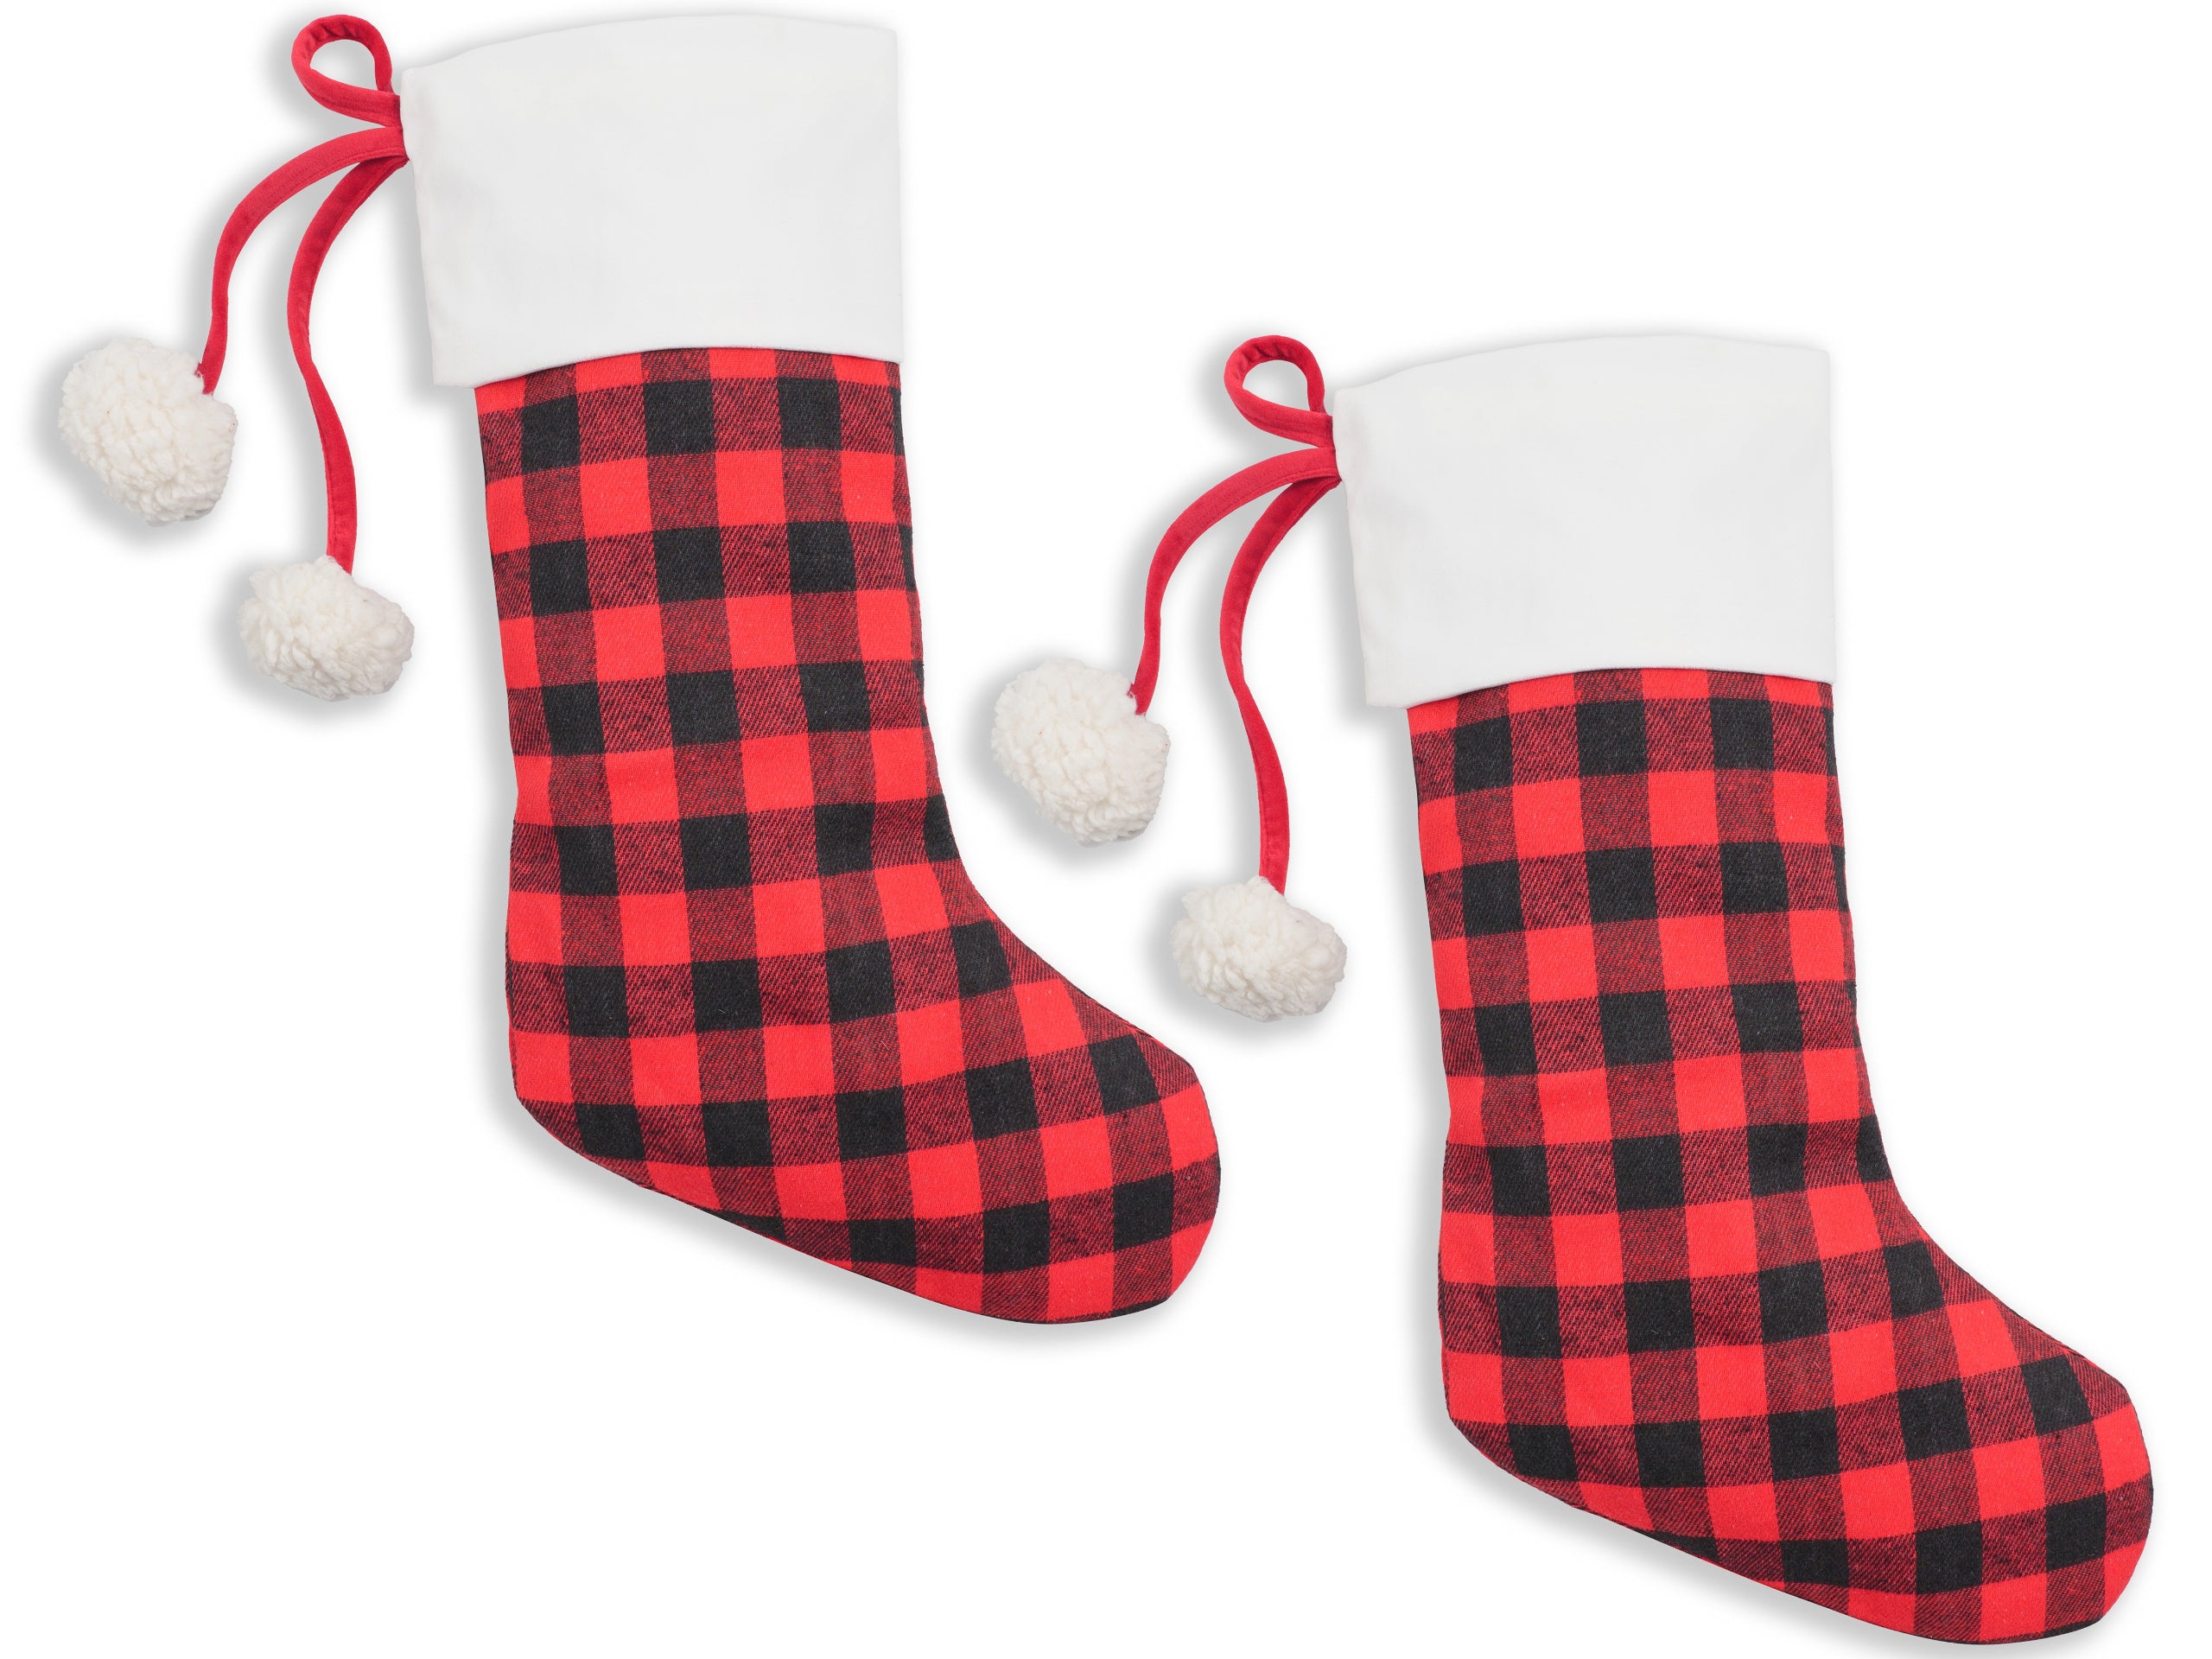 KAF Home Christmas/Holiday Stockings | Set of 2 Stockings with Pom Poms - 19" x 11"